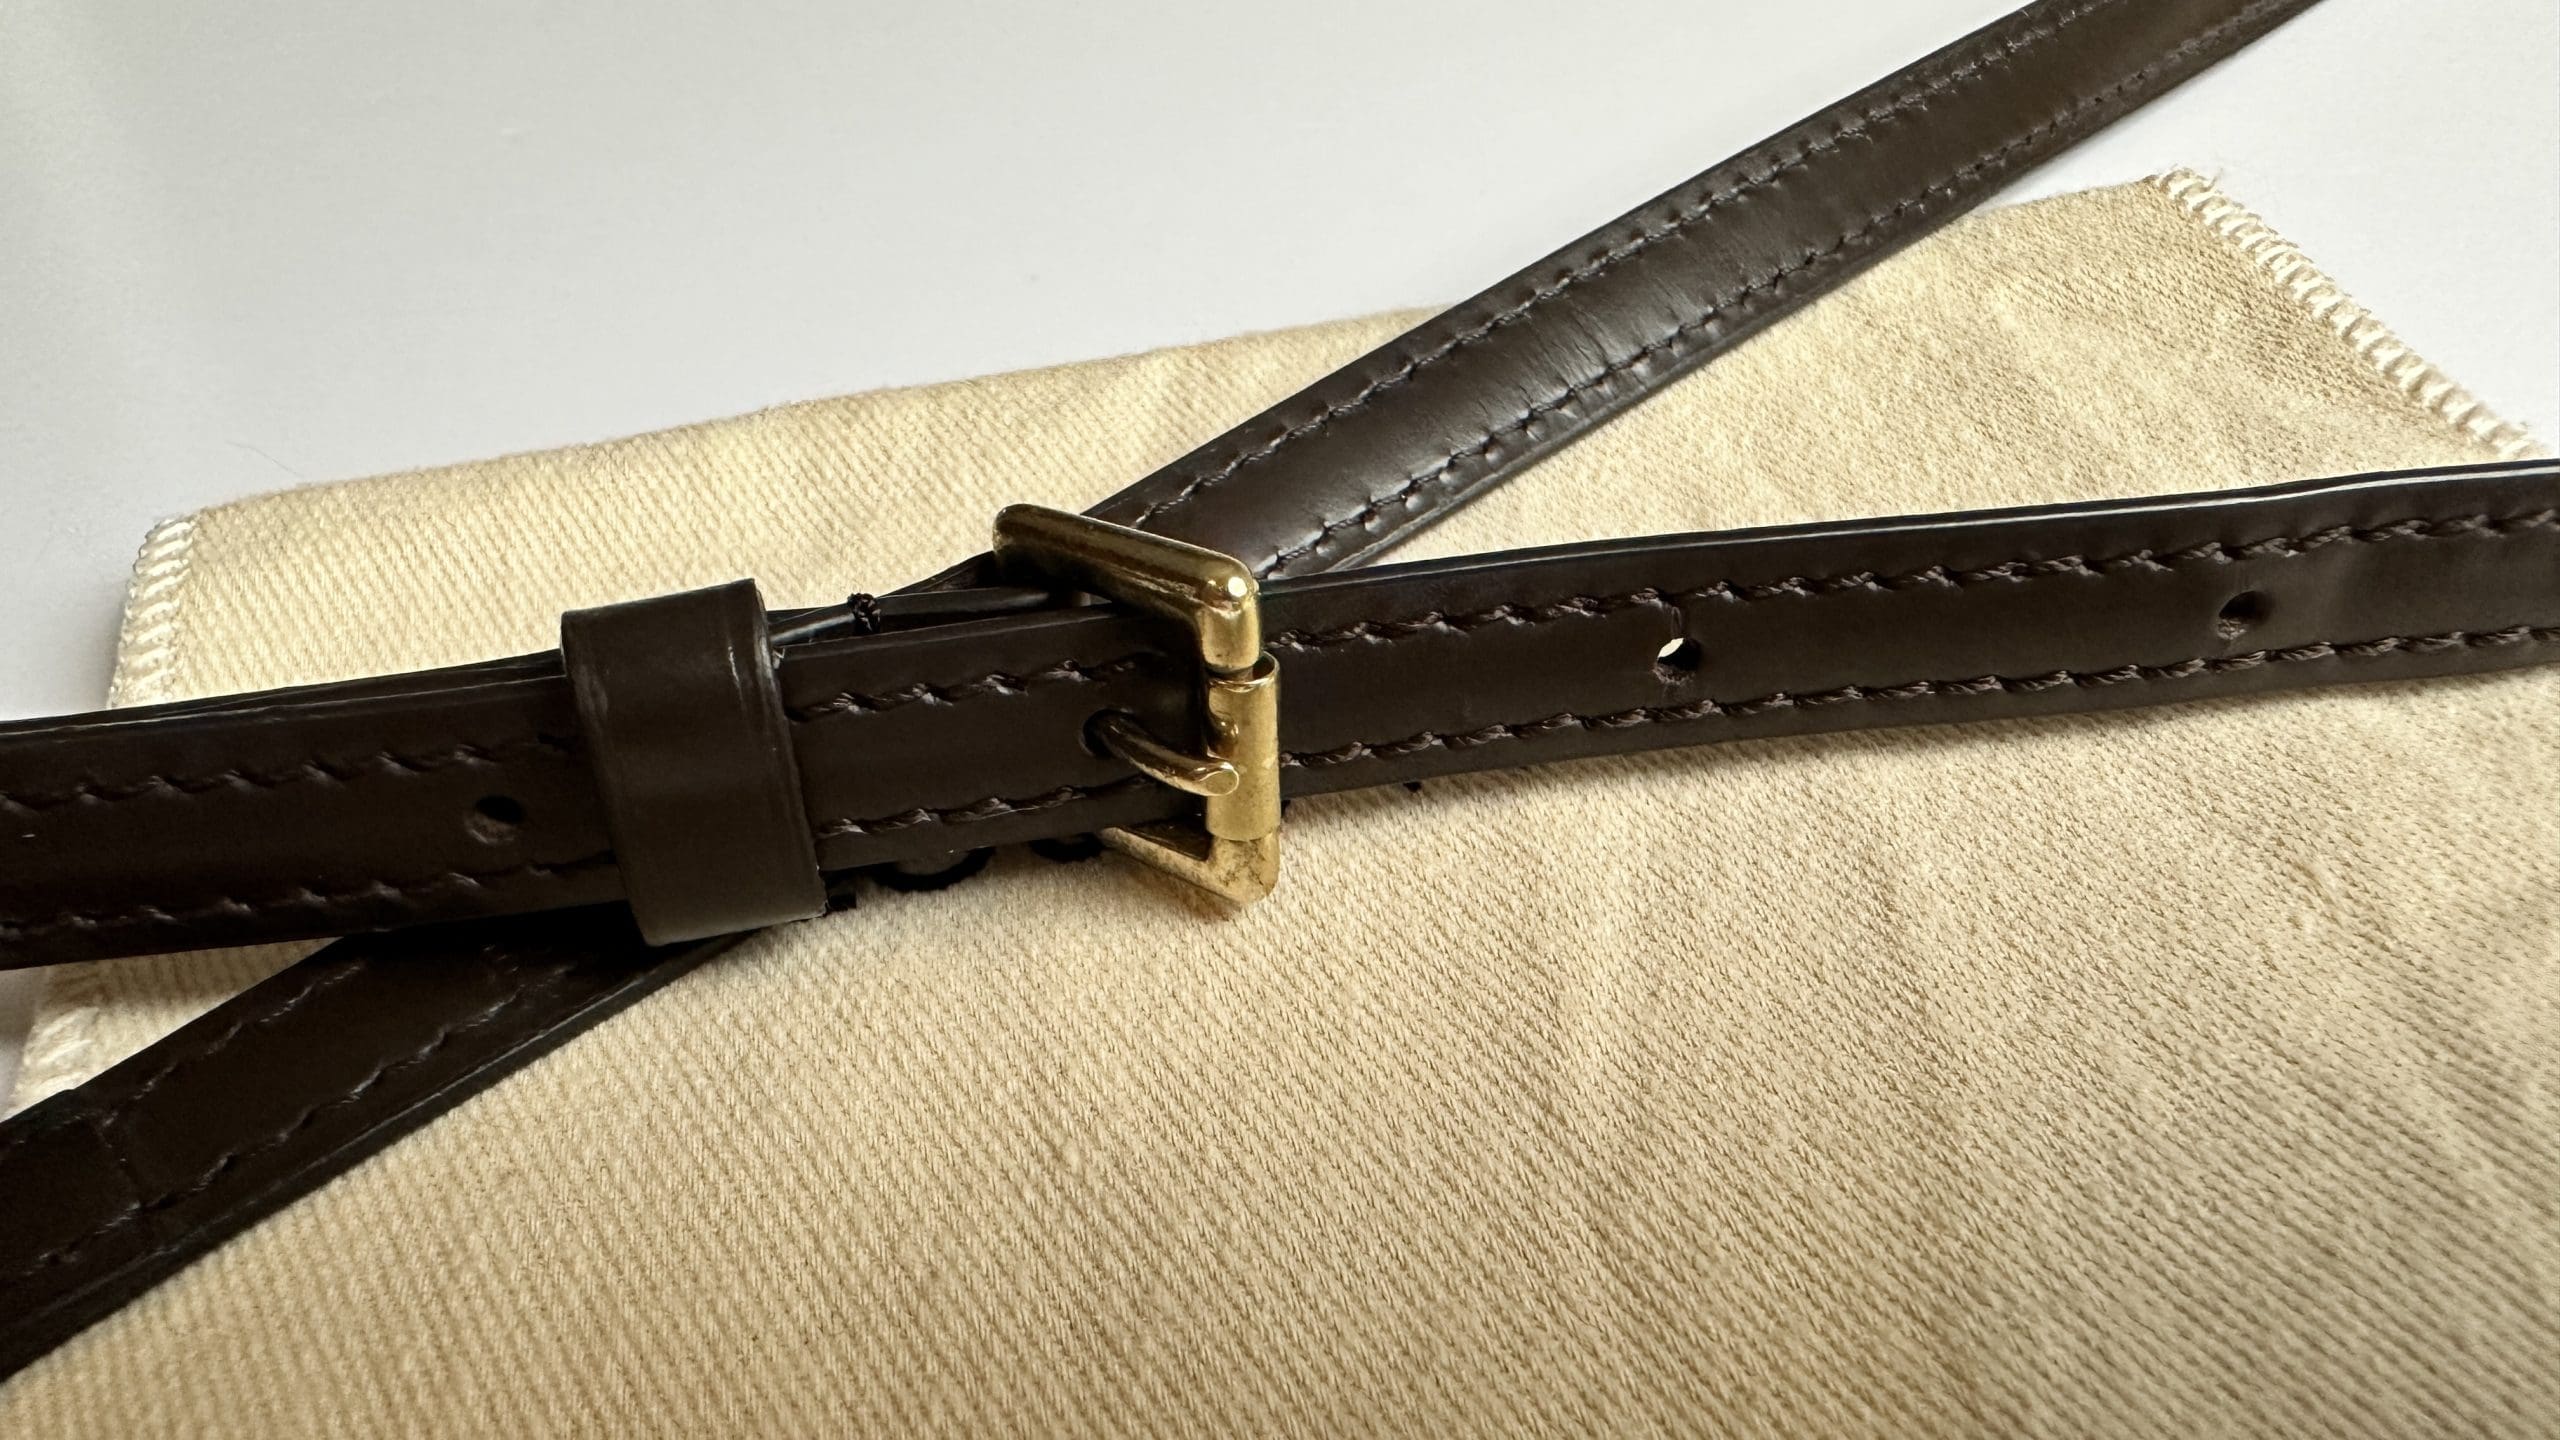 12mm Vachetta Strap for Louis Vuitton Pochette Accessoire 